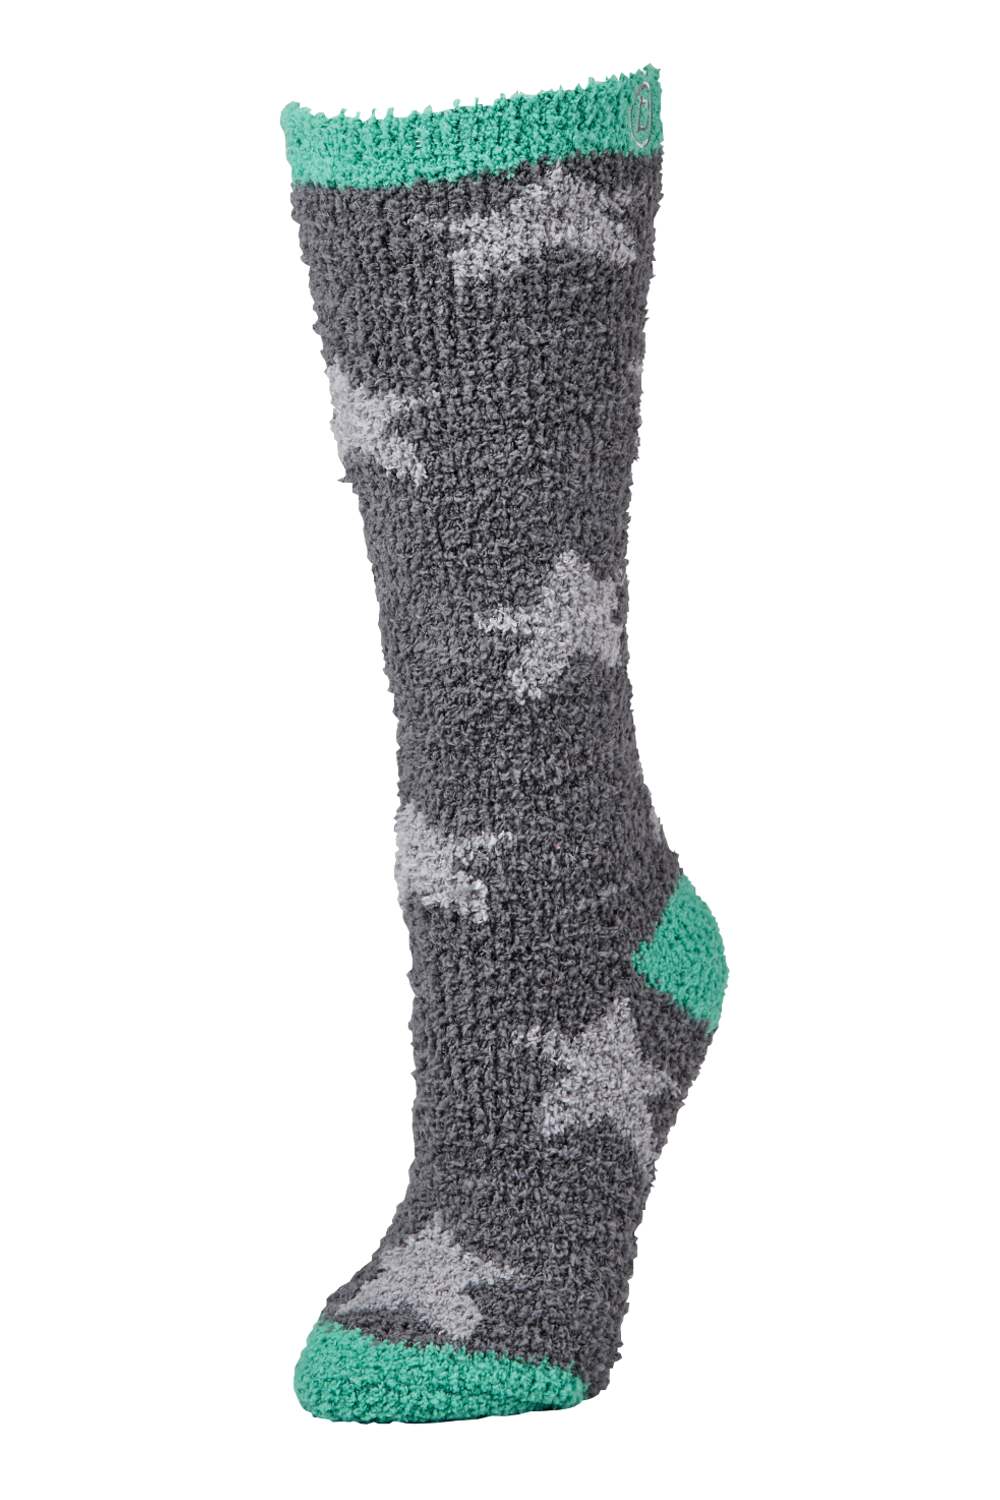 Dublin Cosy Socks in Emerald Star 